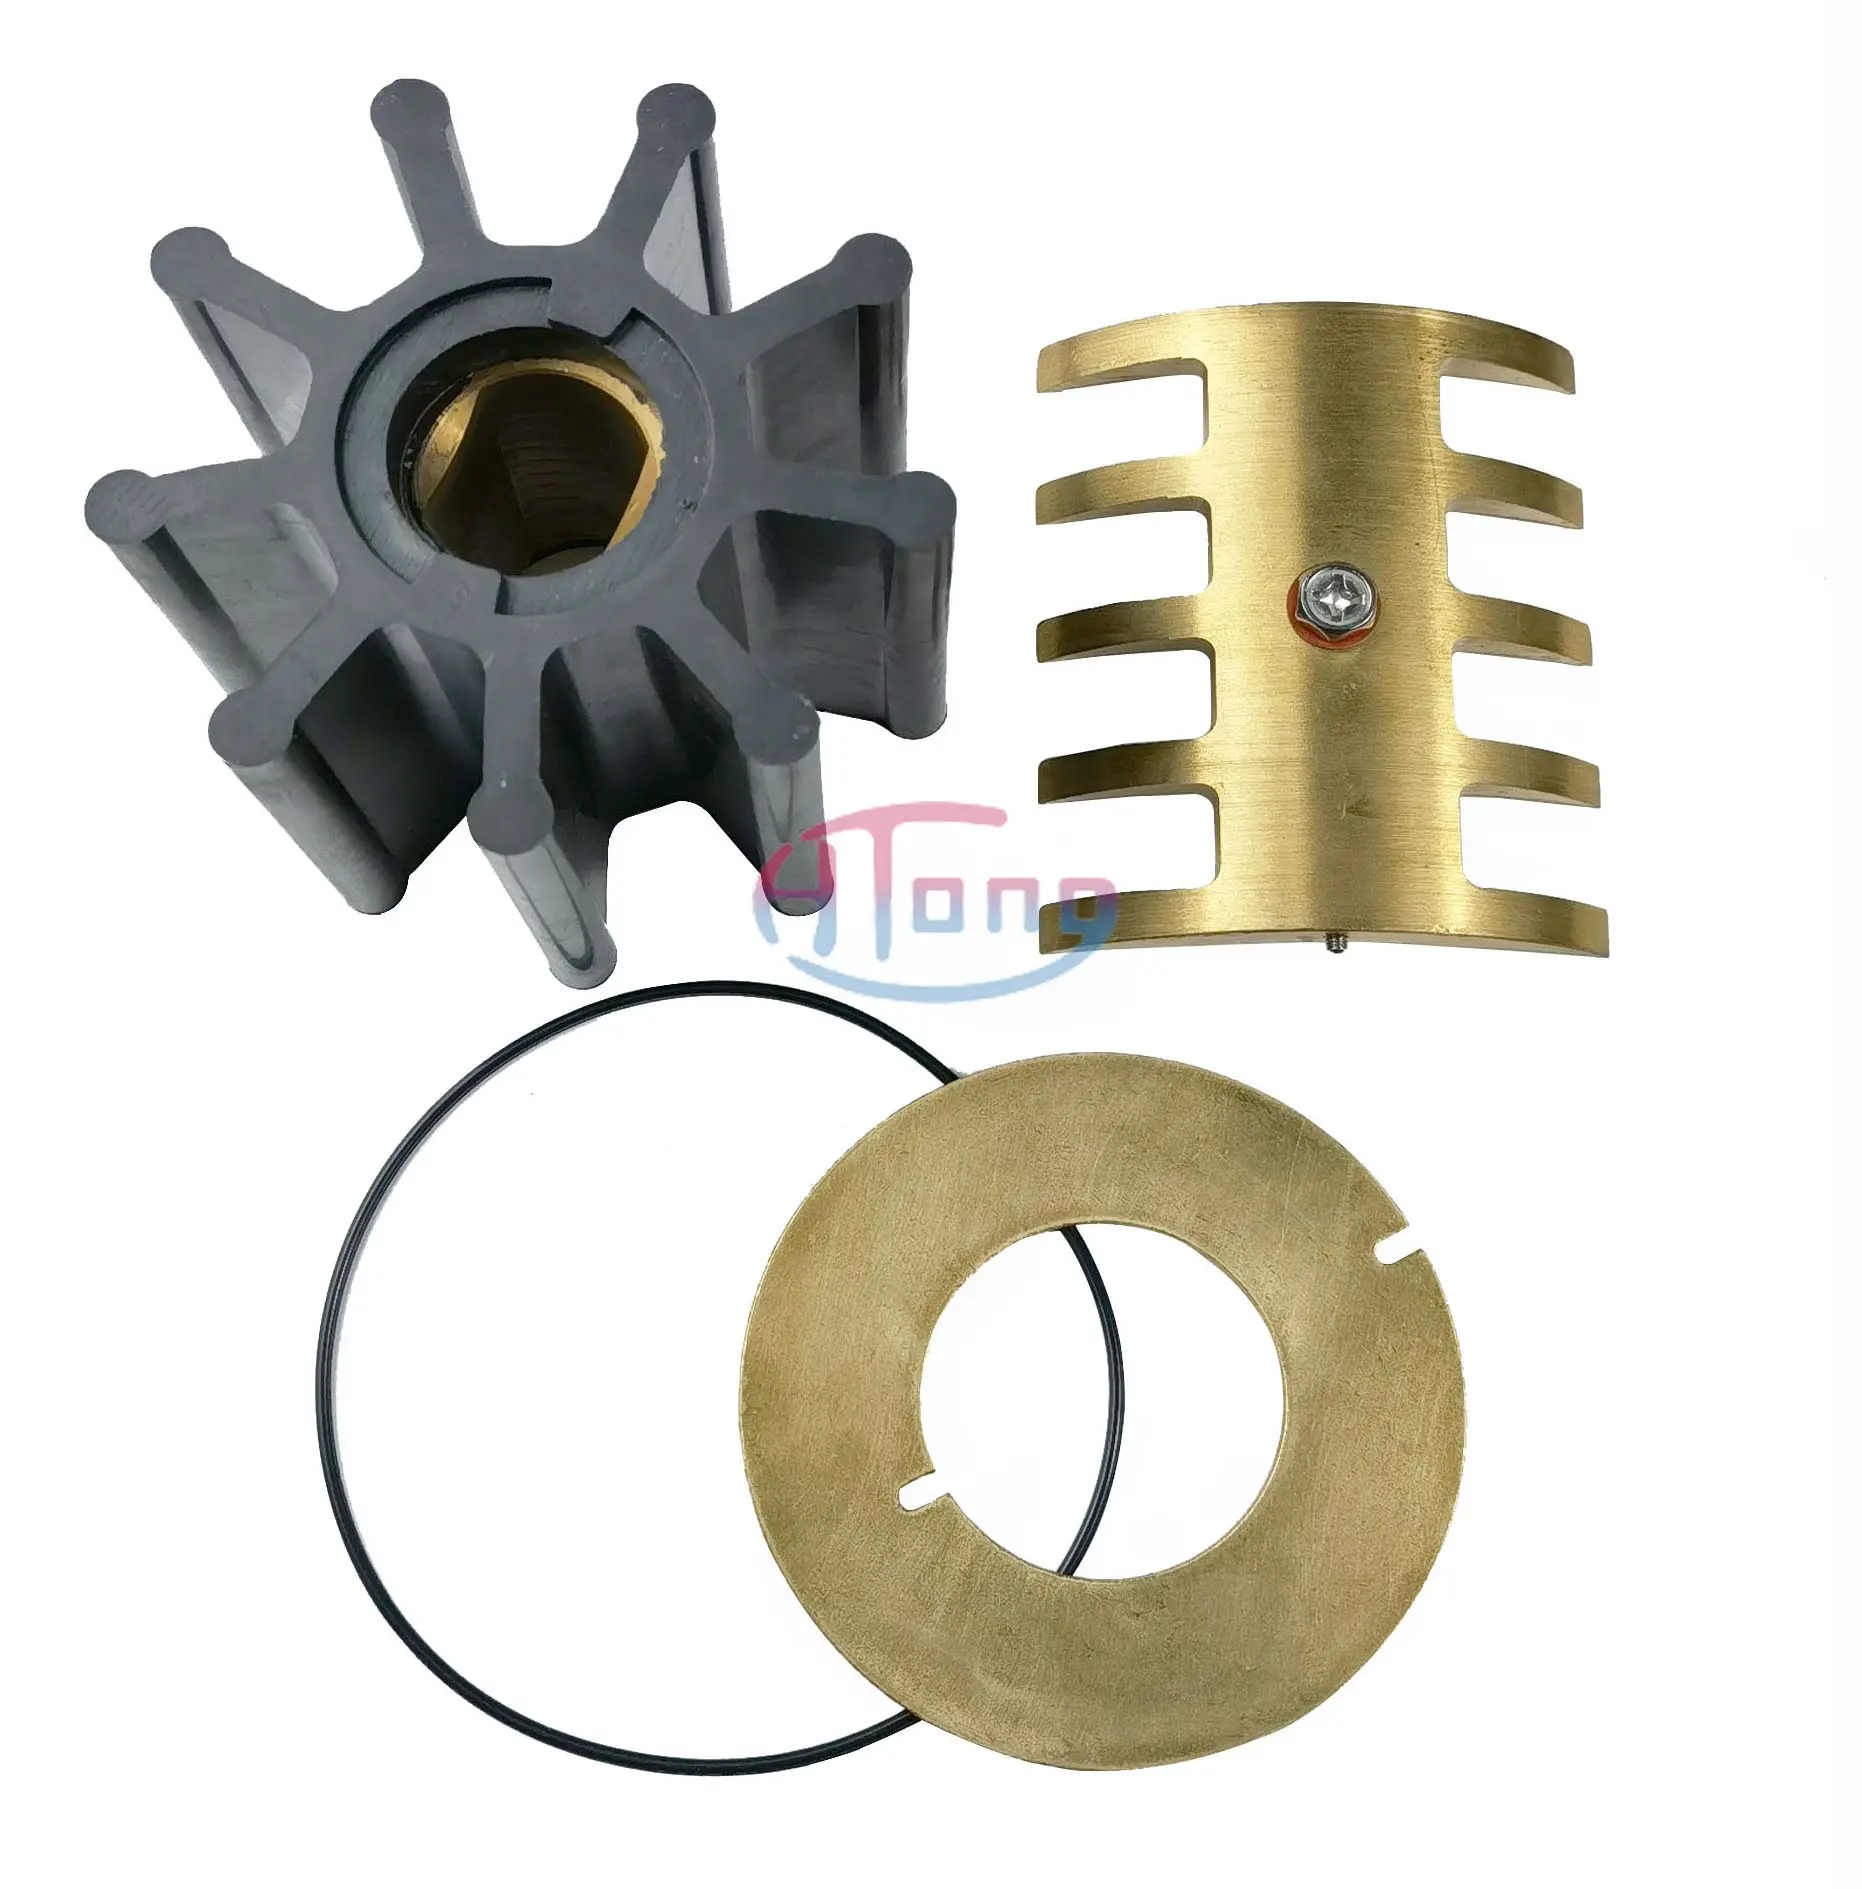 Brass CAM0016 and wer0003 for DJ pump 088-0901 impeller DS 65.06804-0001 JMP 8201-01K rubber impeller